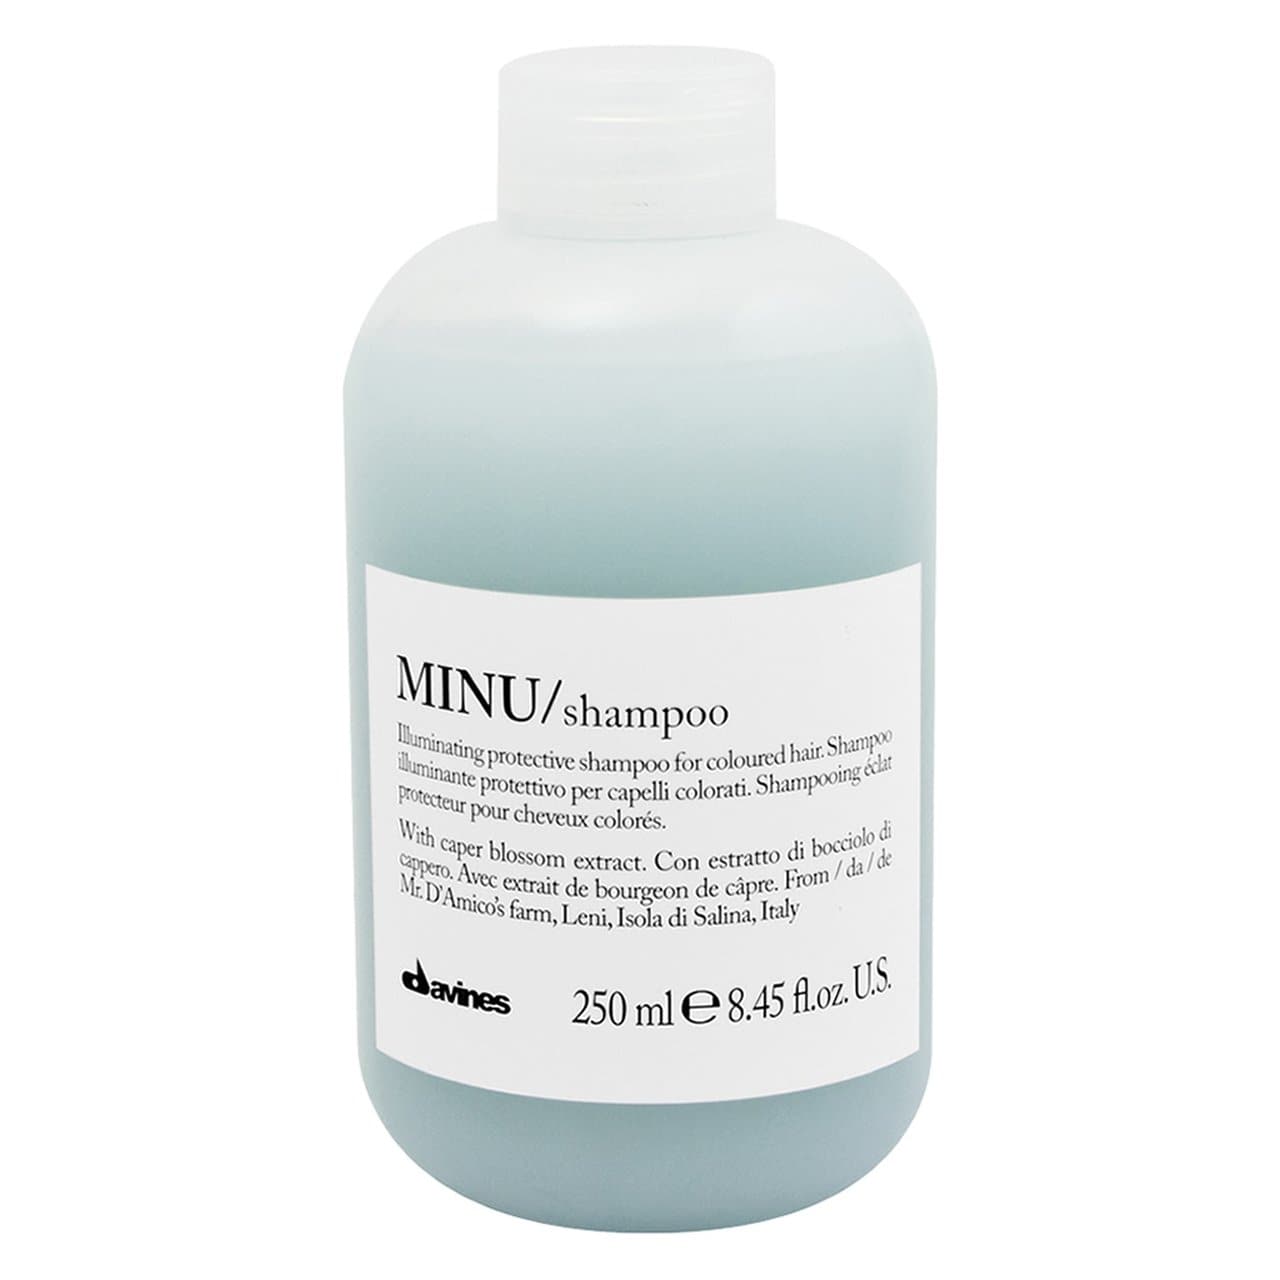 MINU Illuminating and Protective Shampoo